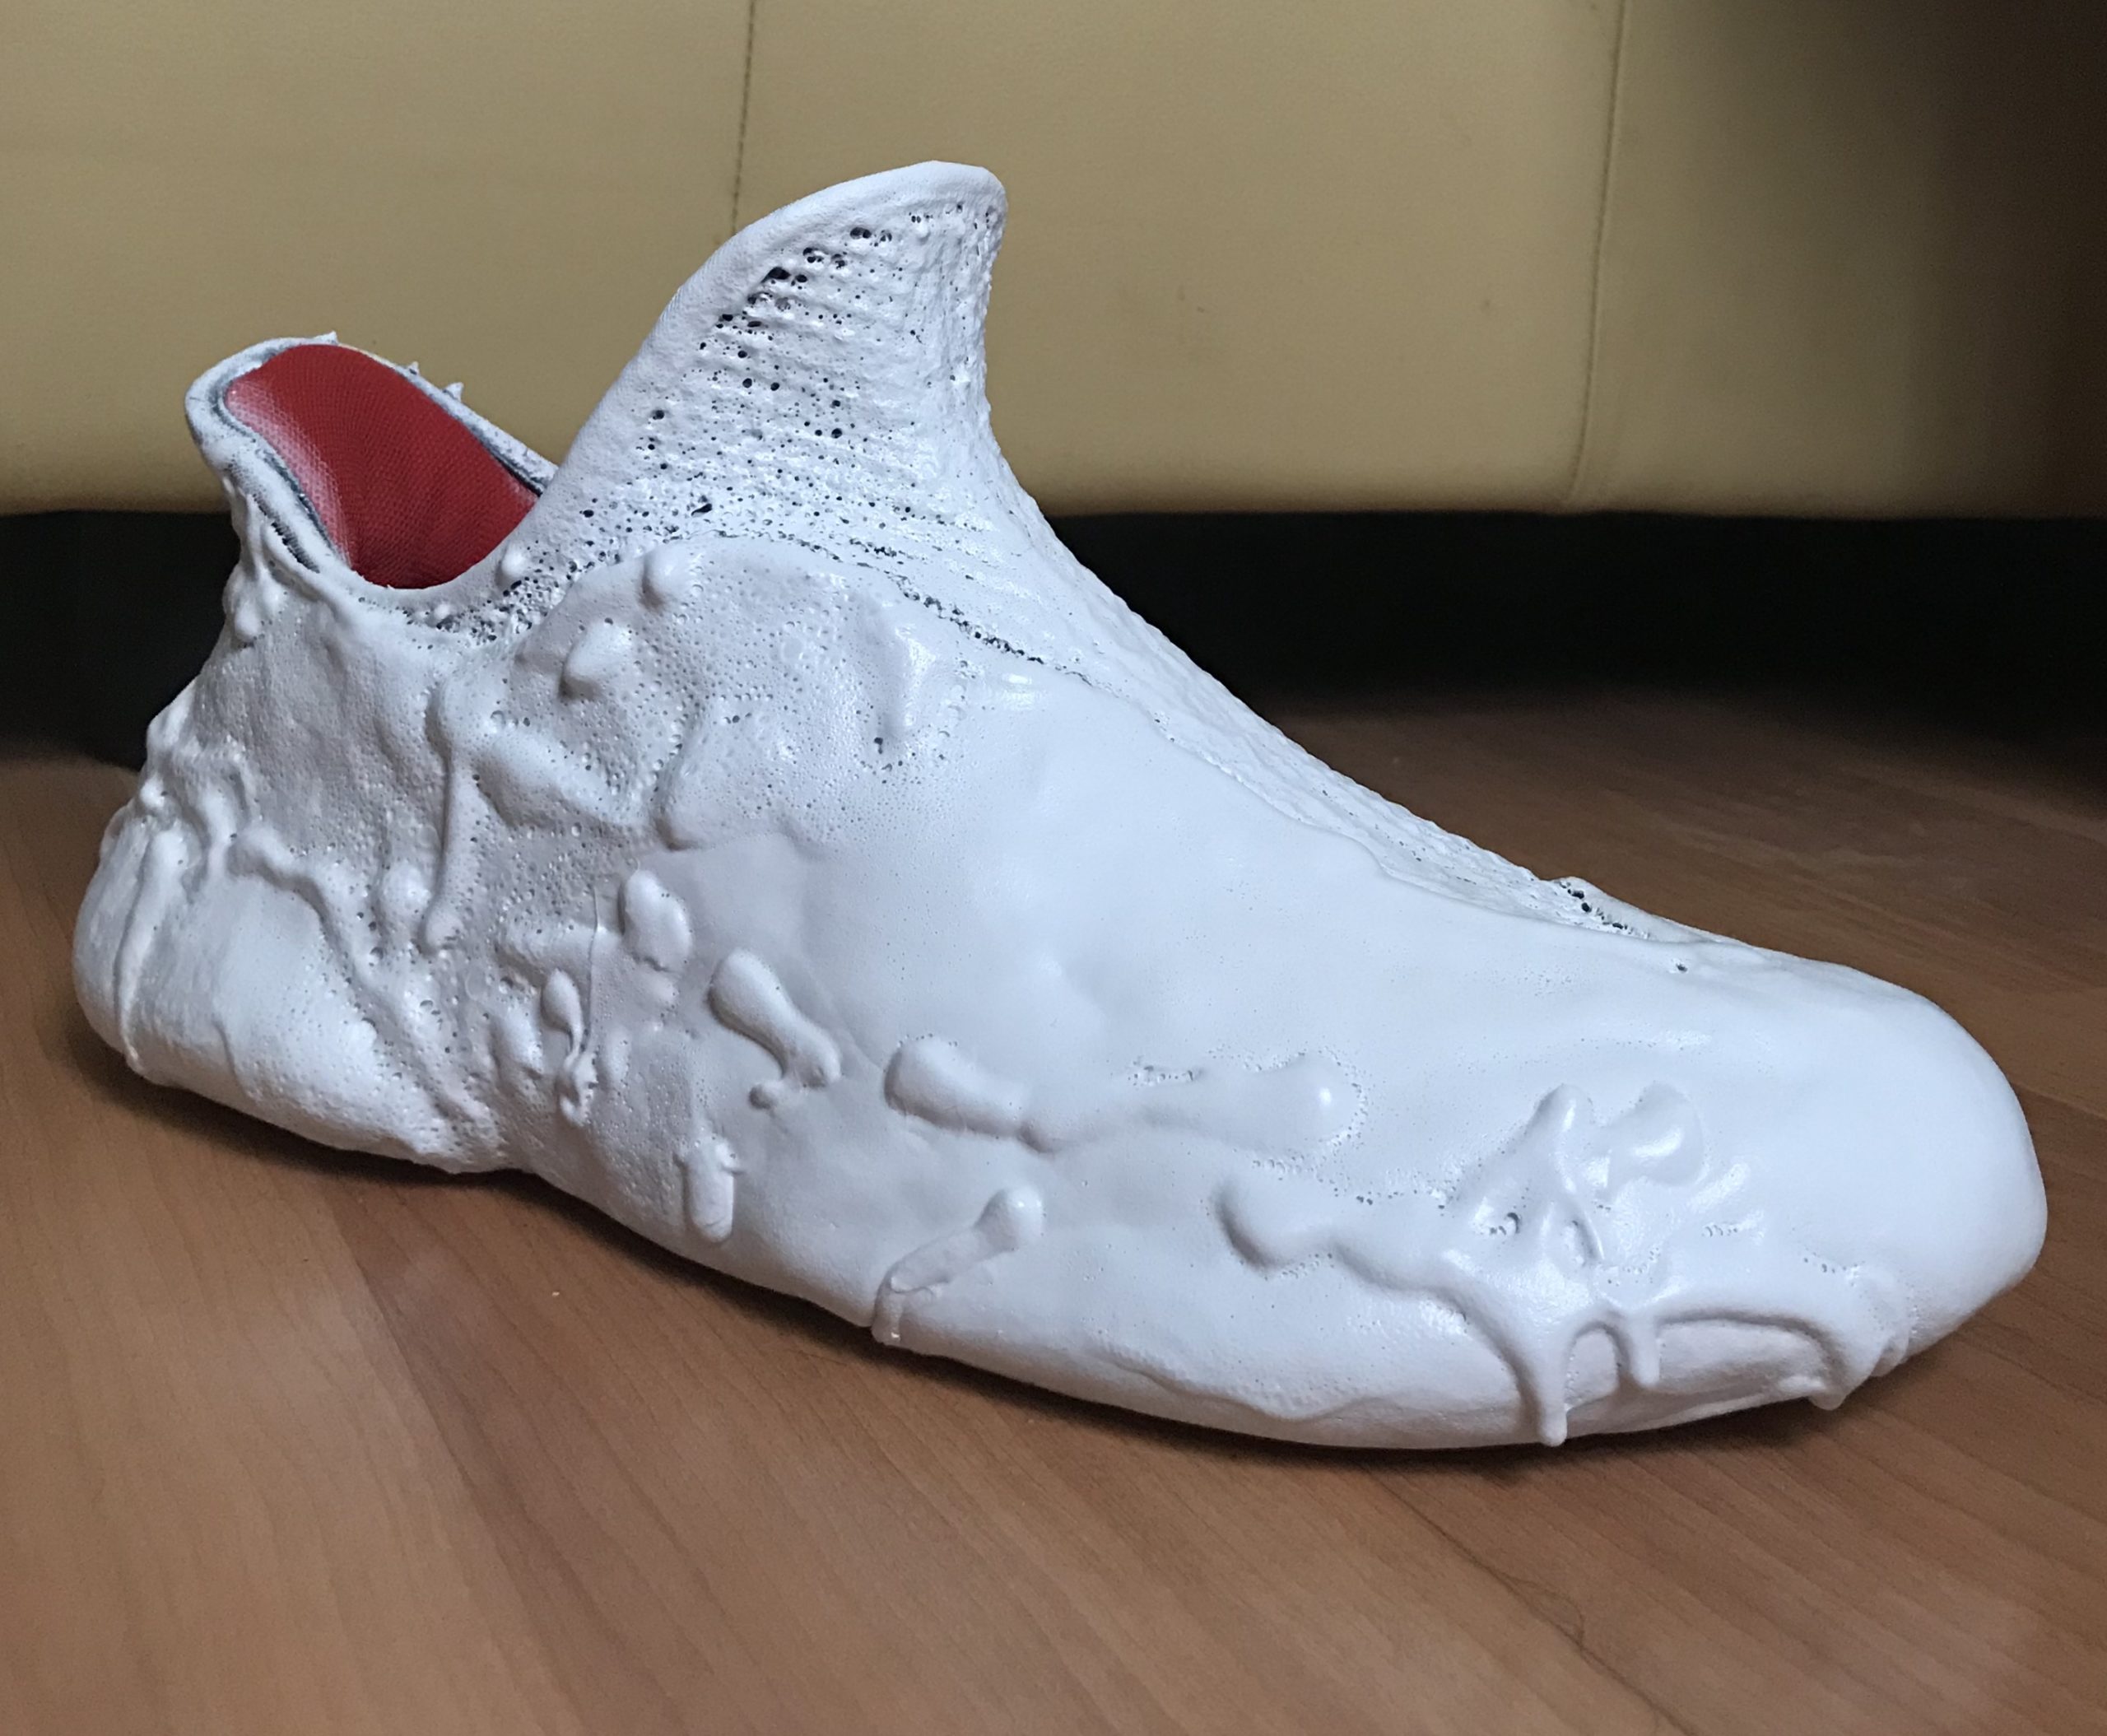 plasti dip on shoes